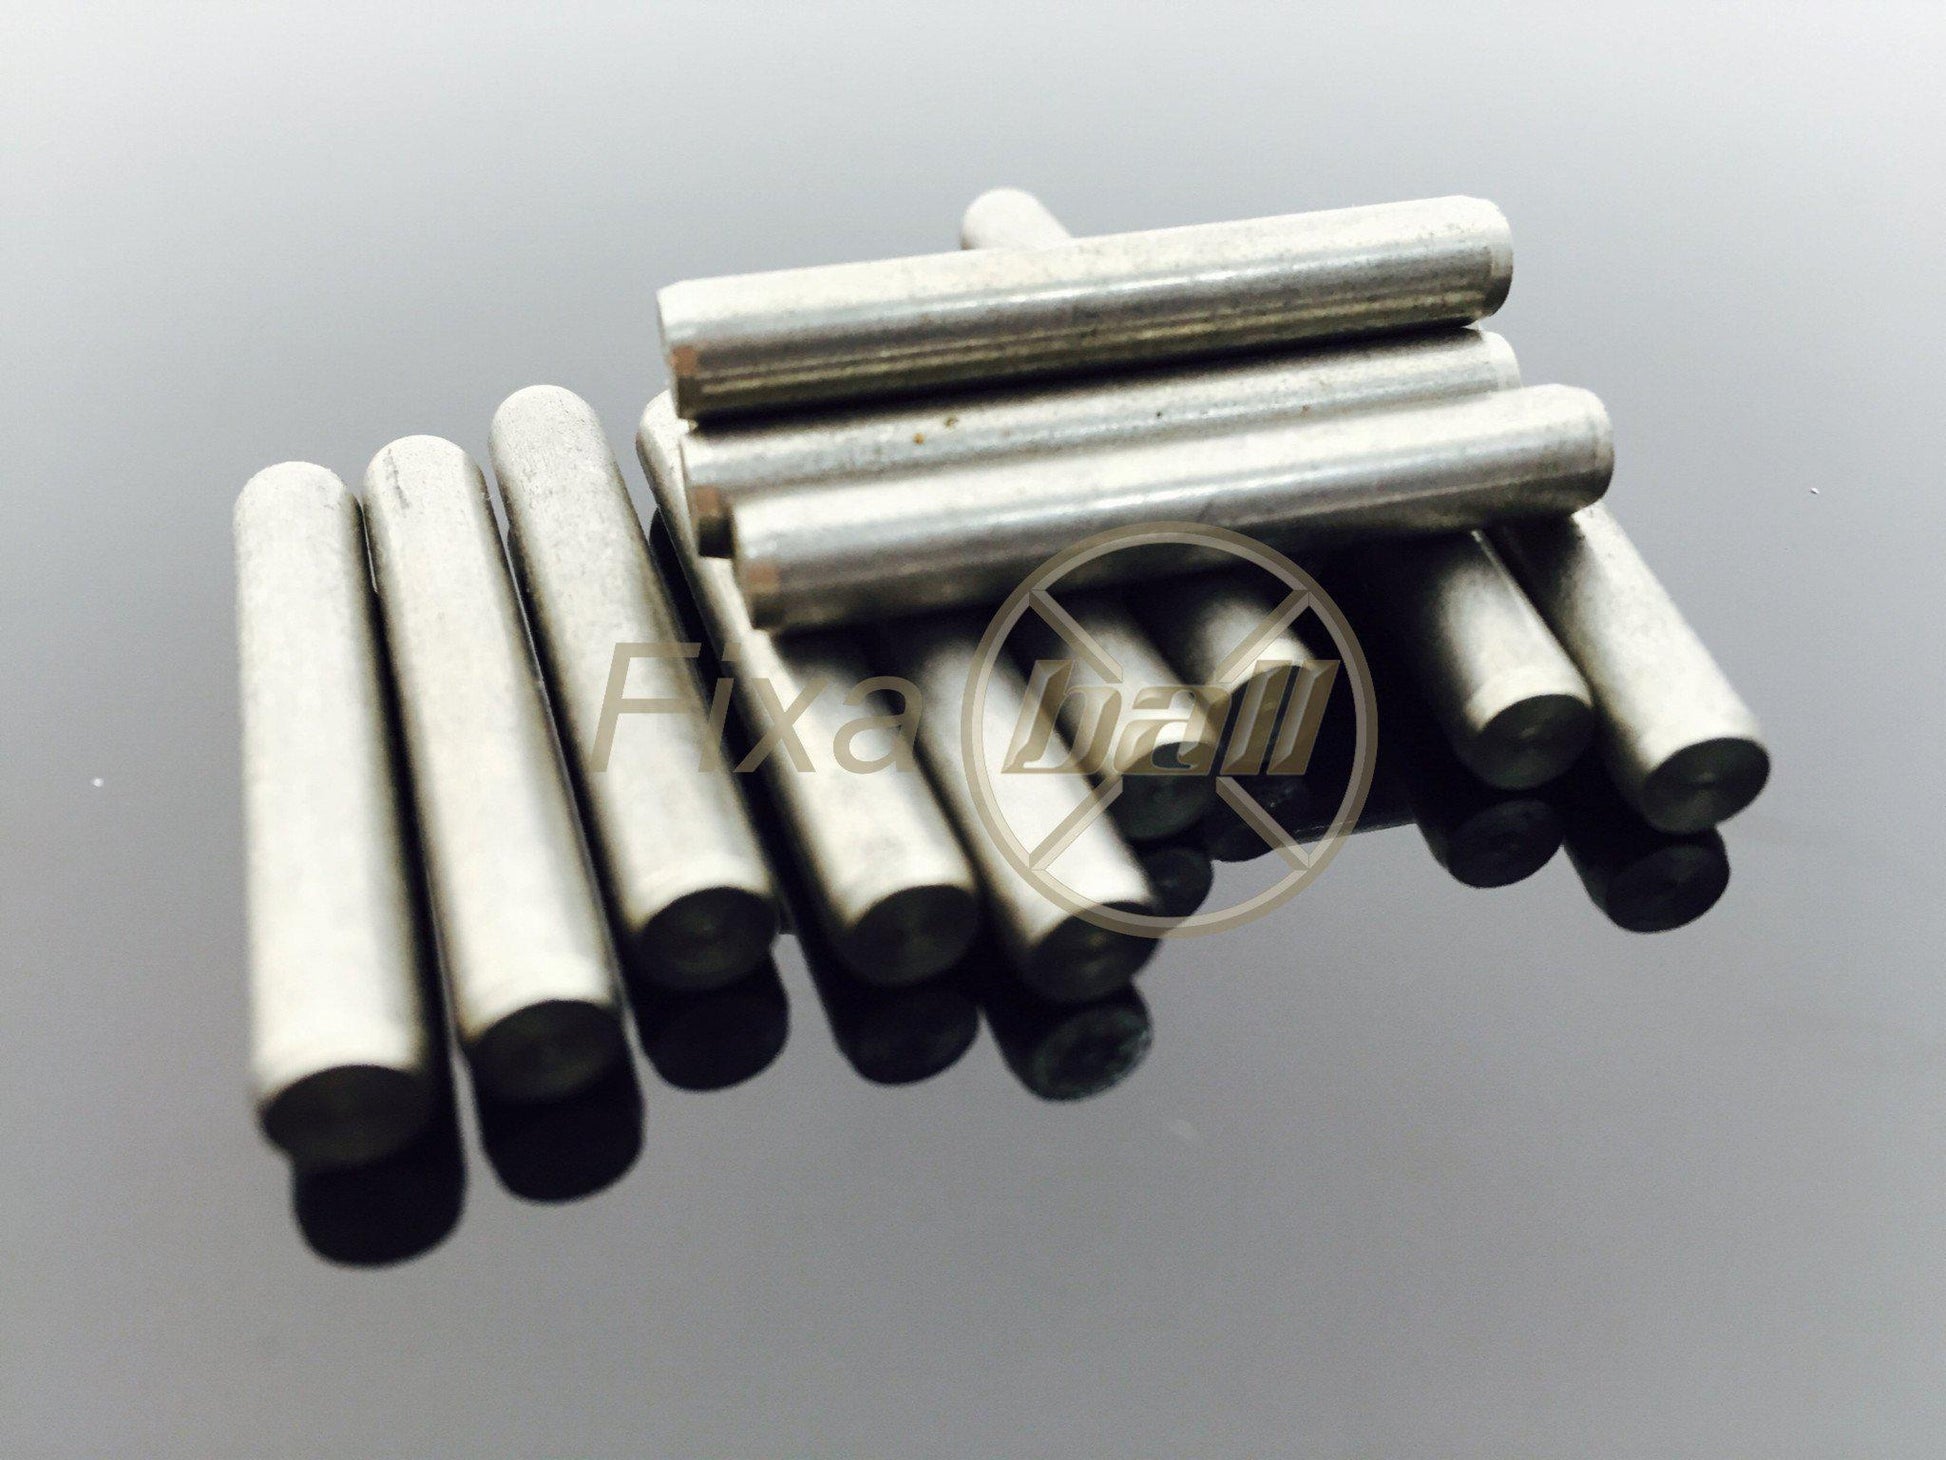 M3, Dowel Pins, A2/ 304 Stainless Steel, DIN 7. Dowel Pins M3, Dowel Pins, A2/ 304 Stainless Steel, DIN 7. Dowel Pins - A2/ 304 Stainless Steel